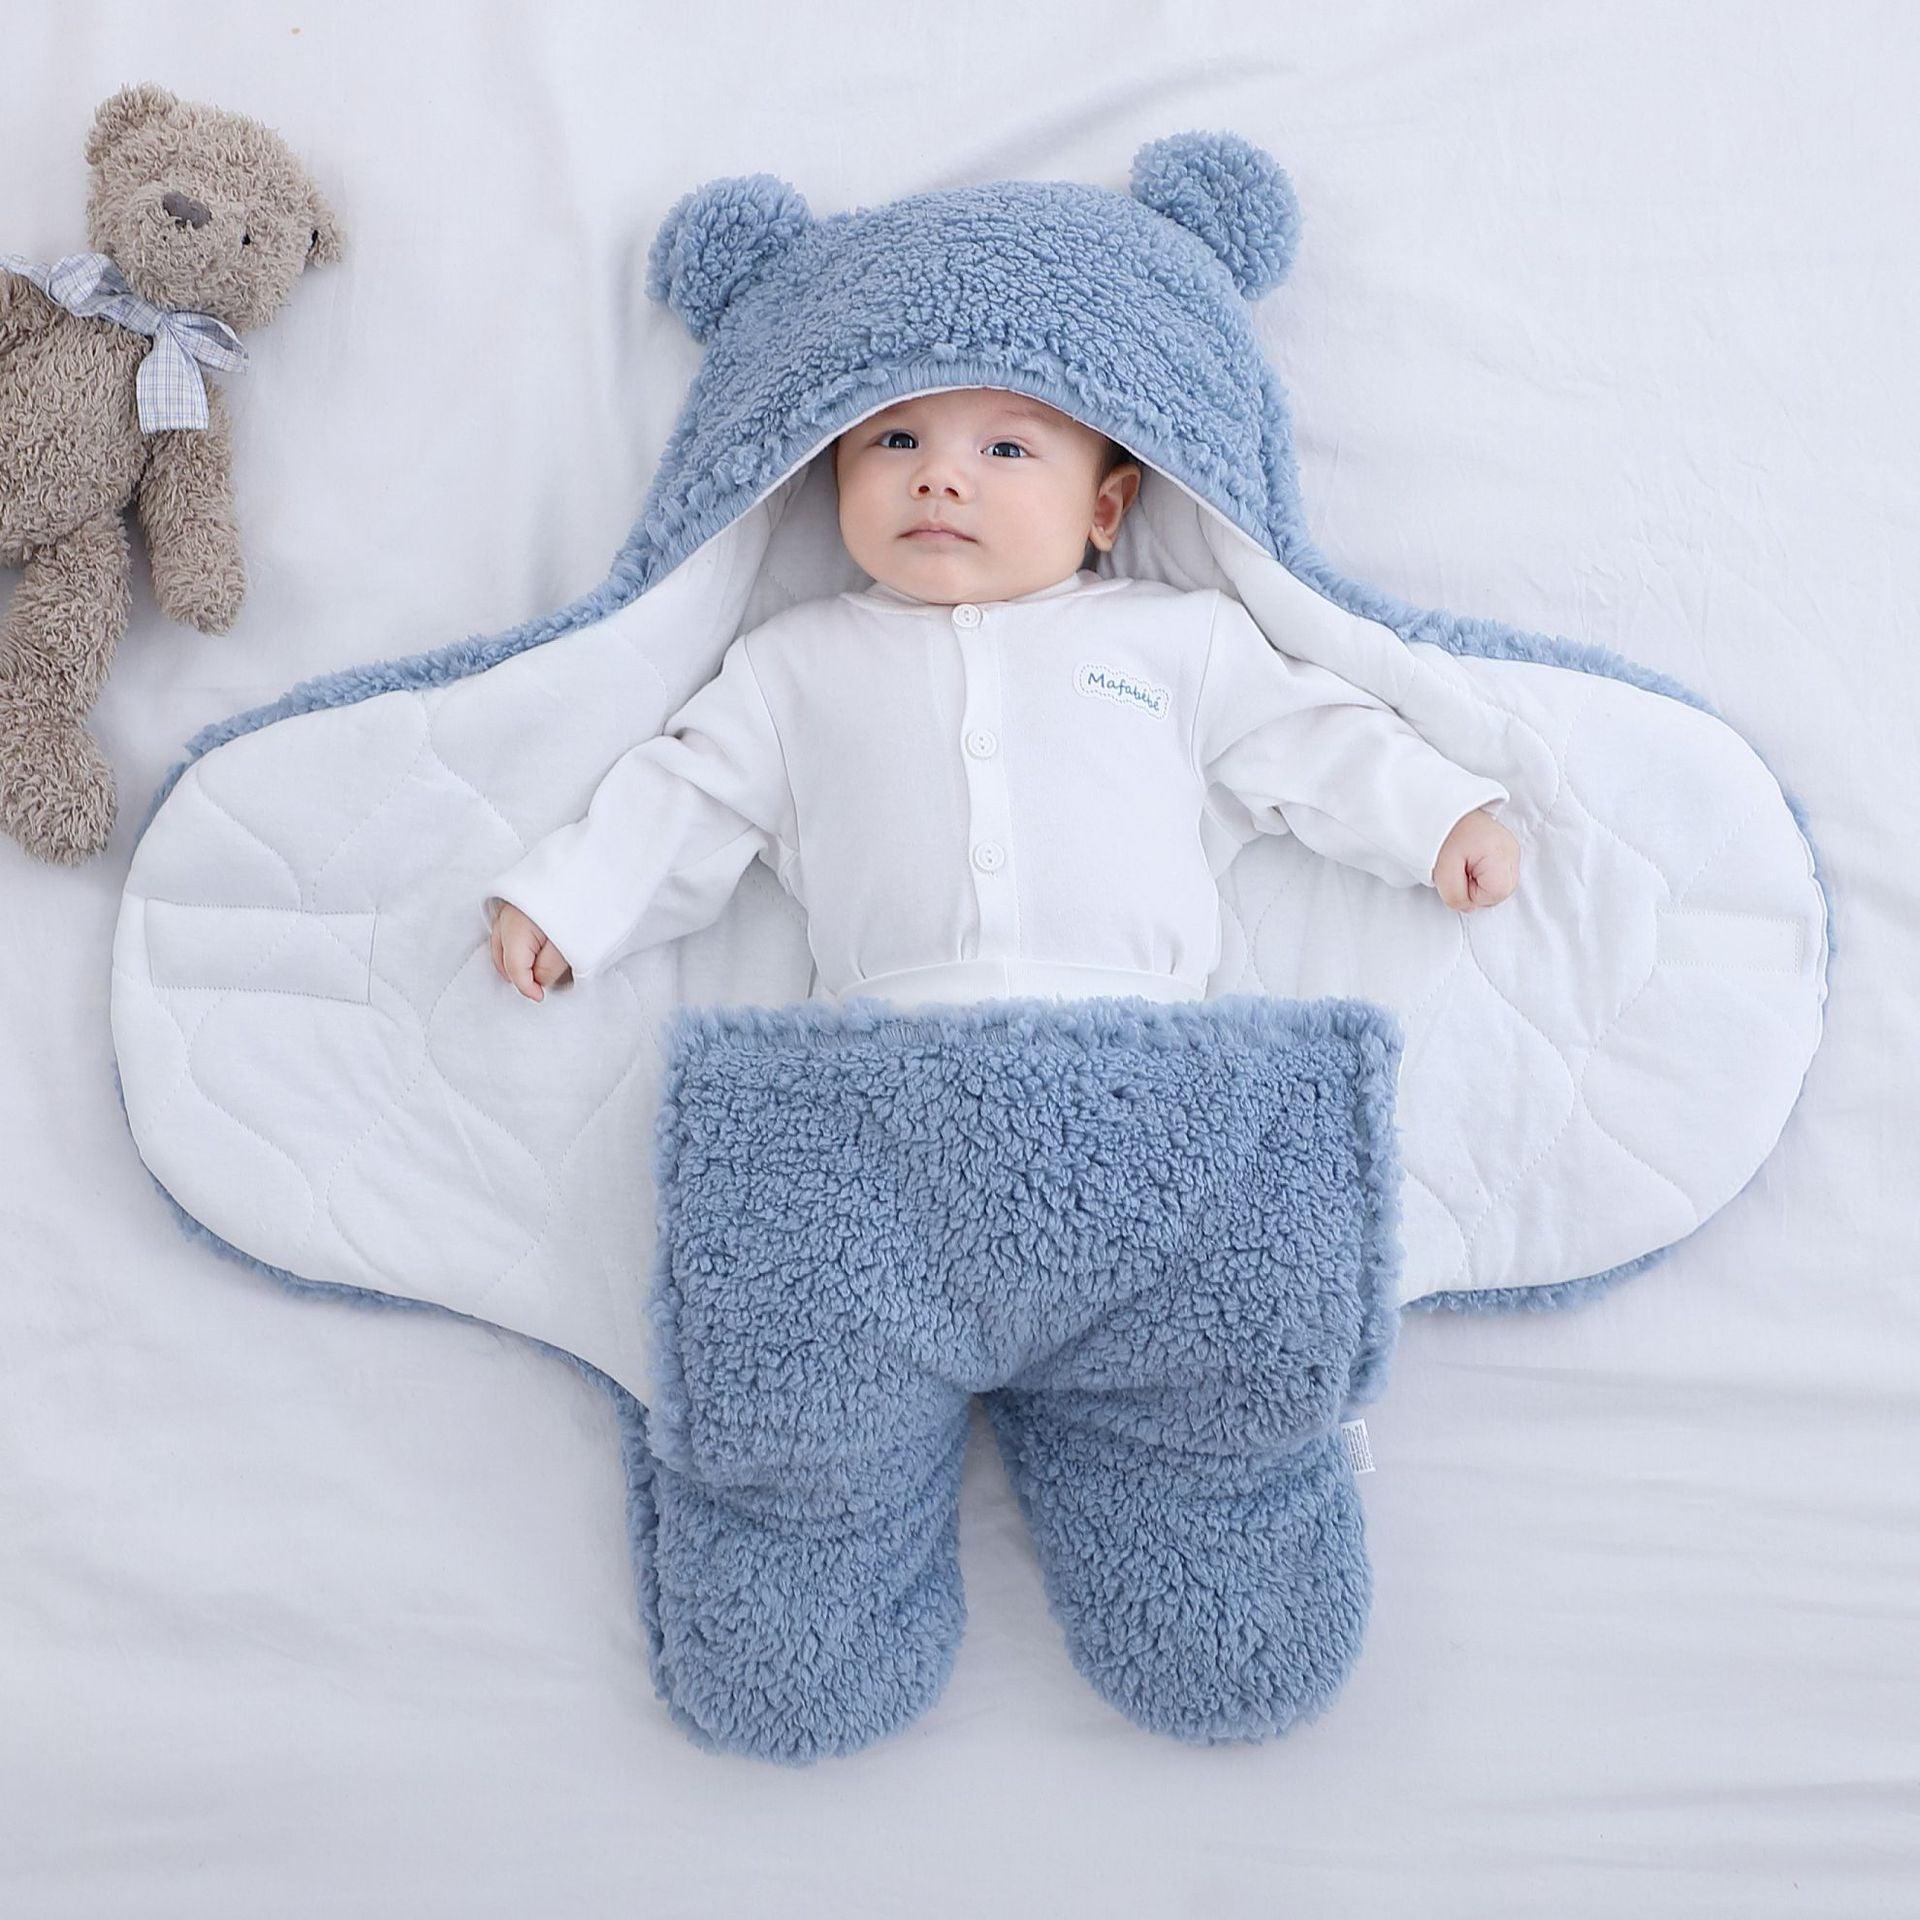 Soft Blankets for Babies - MyStoreLiving